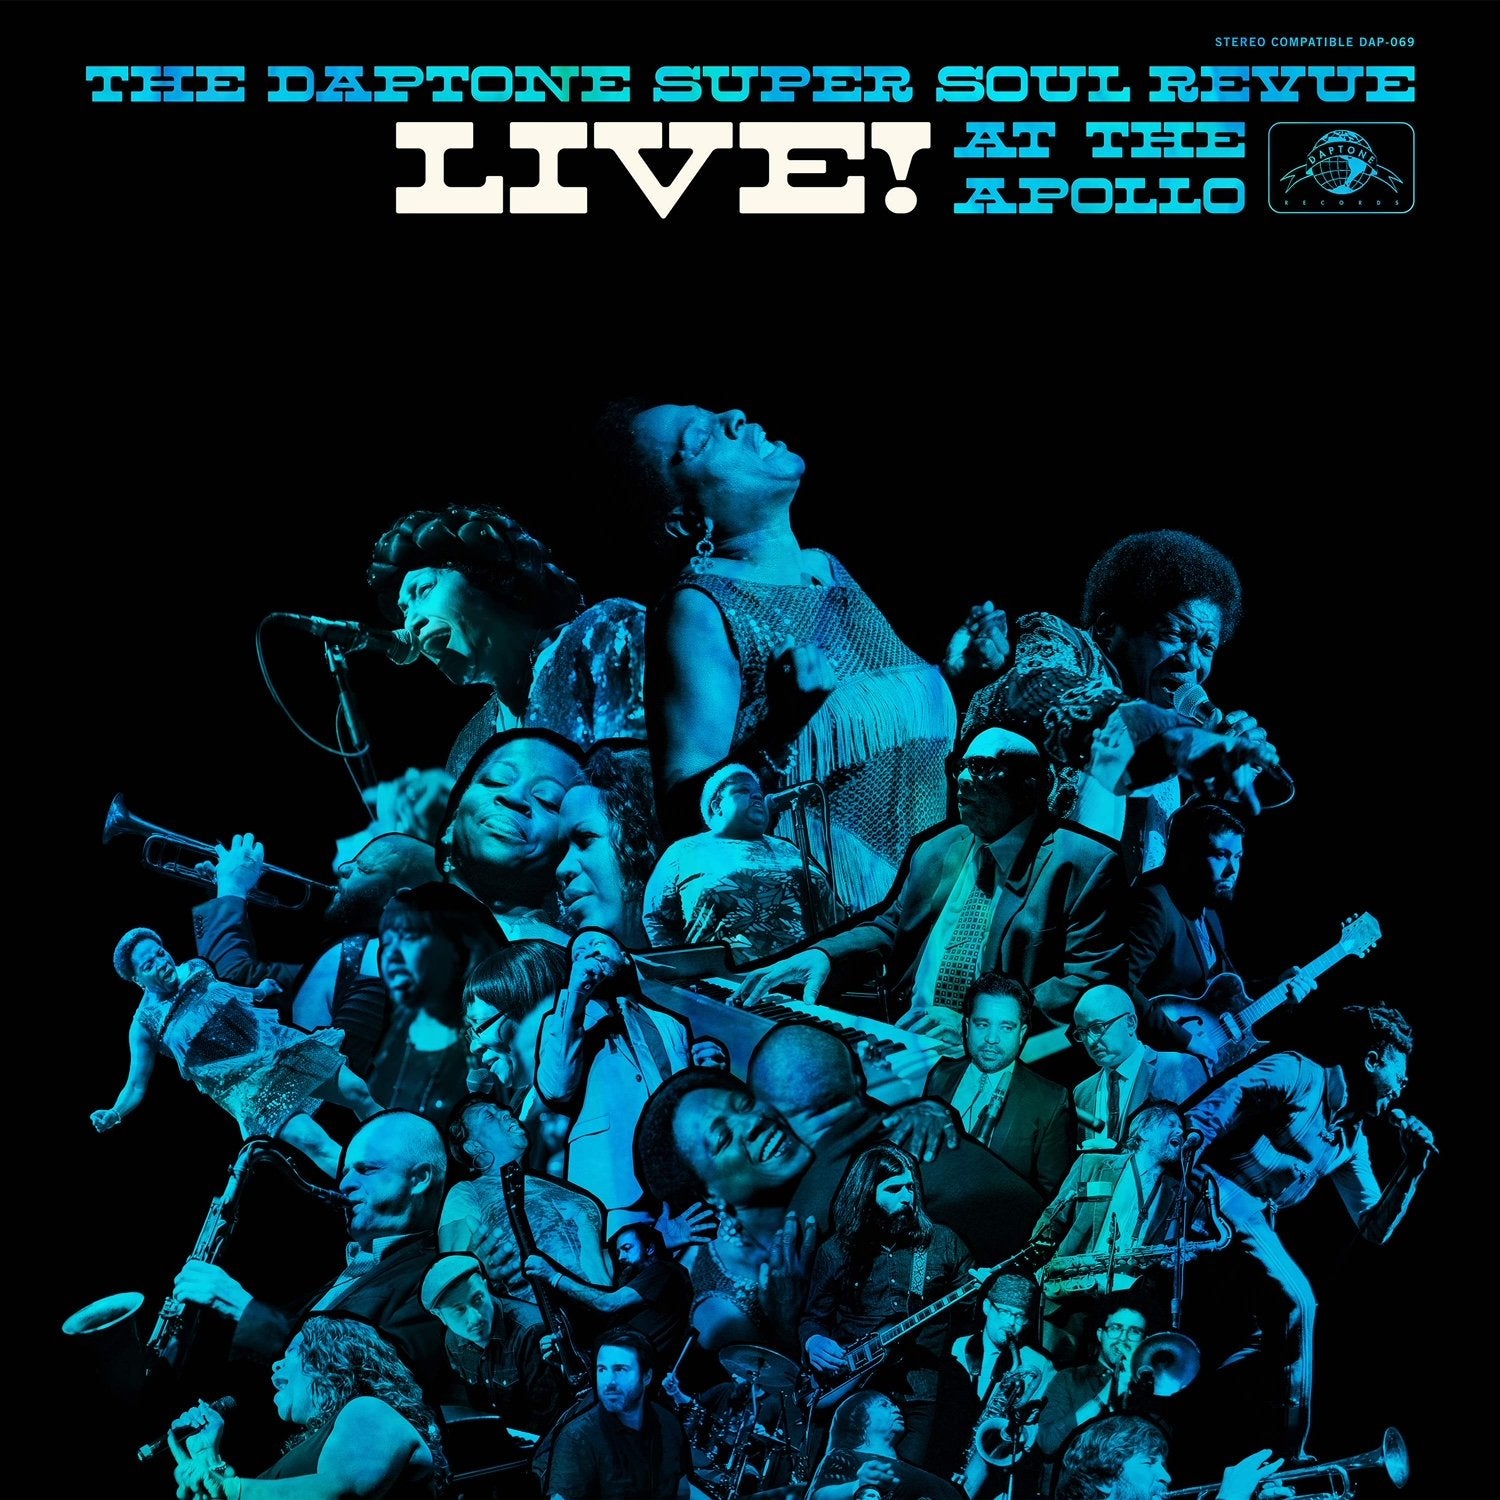 VARIOUS - The Daptone Super Soul Revue Live! At the Apollo - 2CD Set